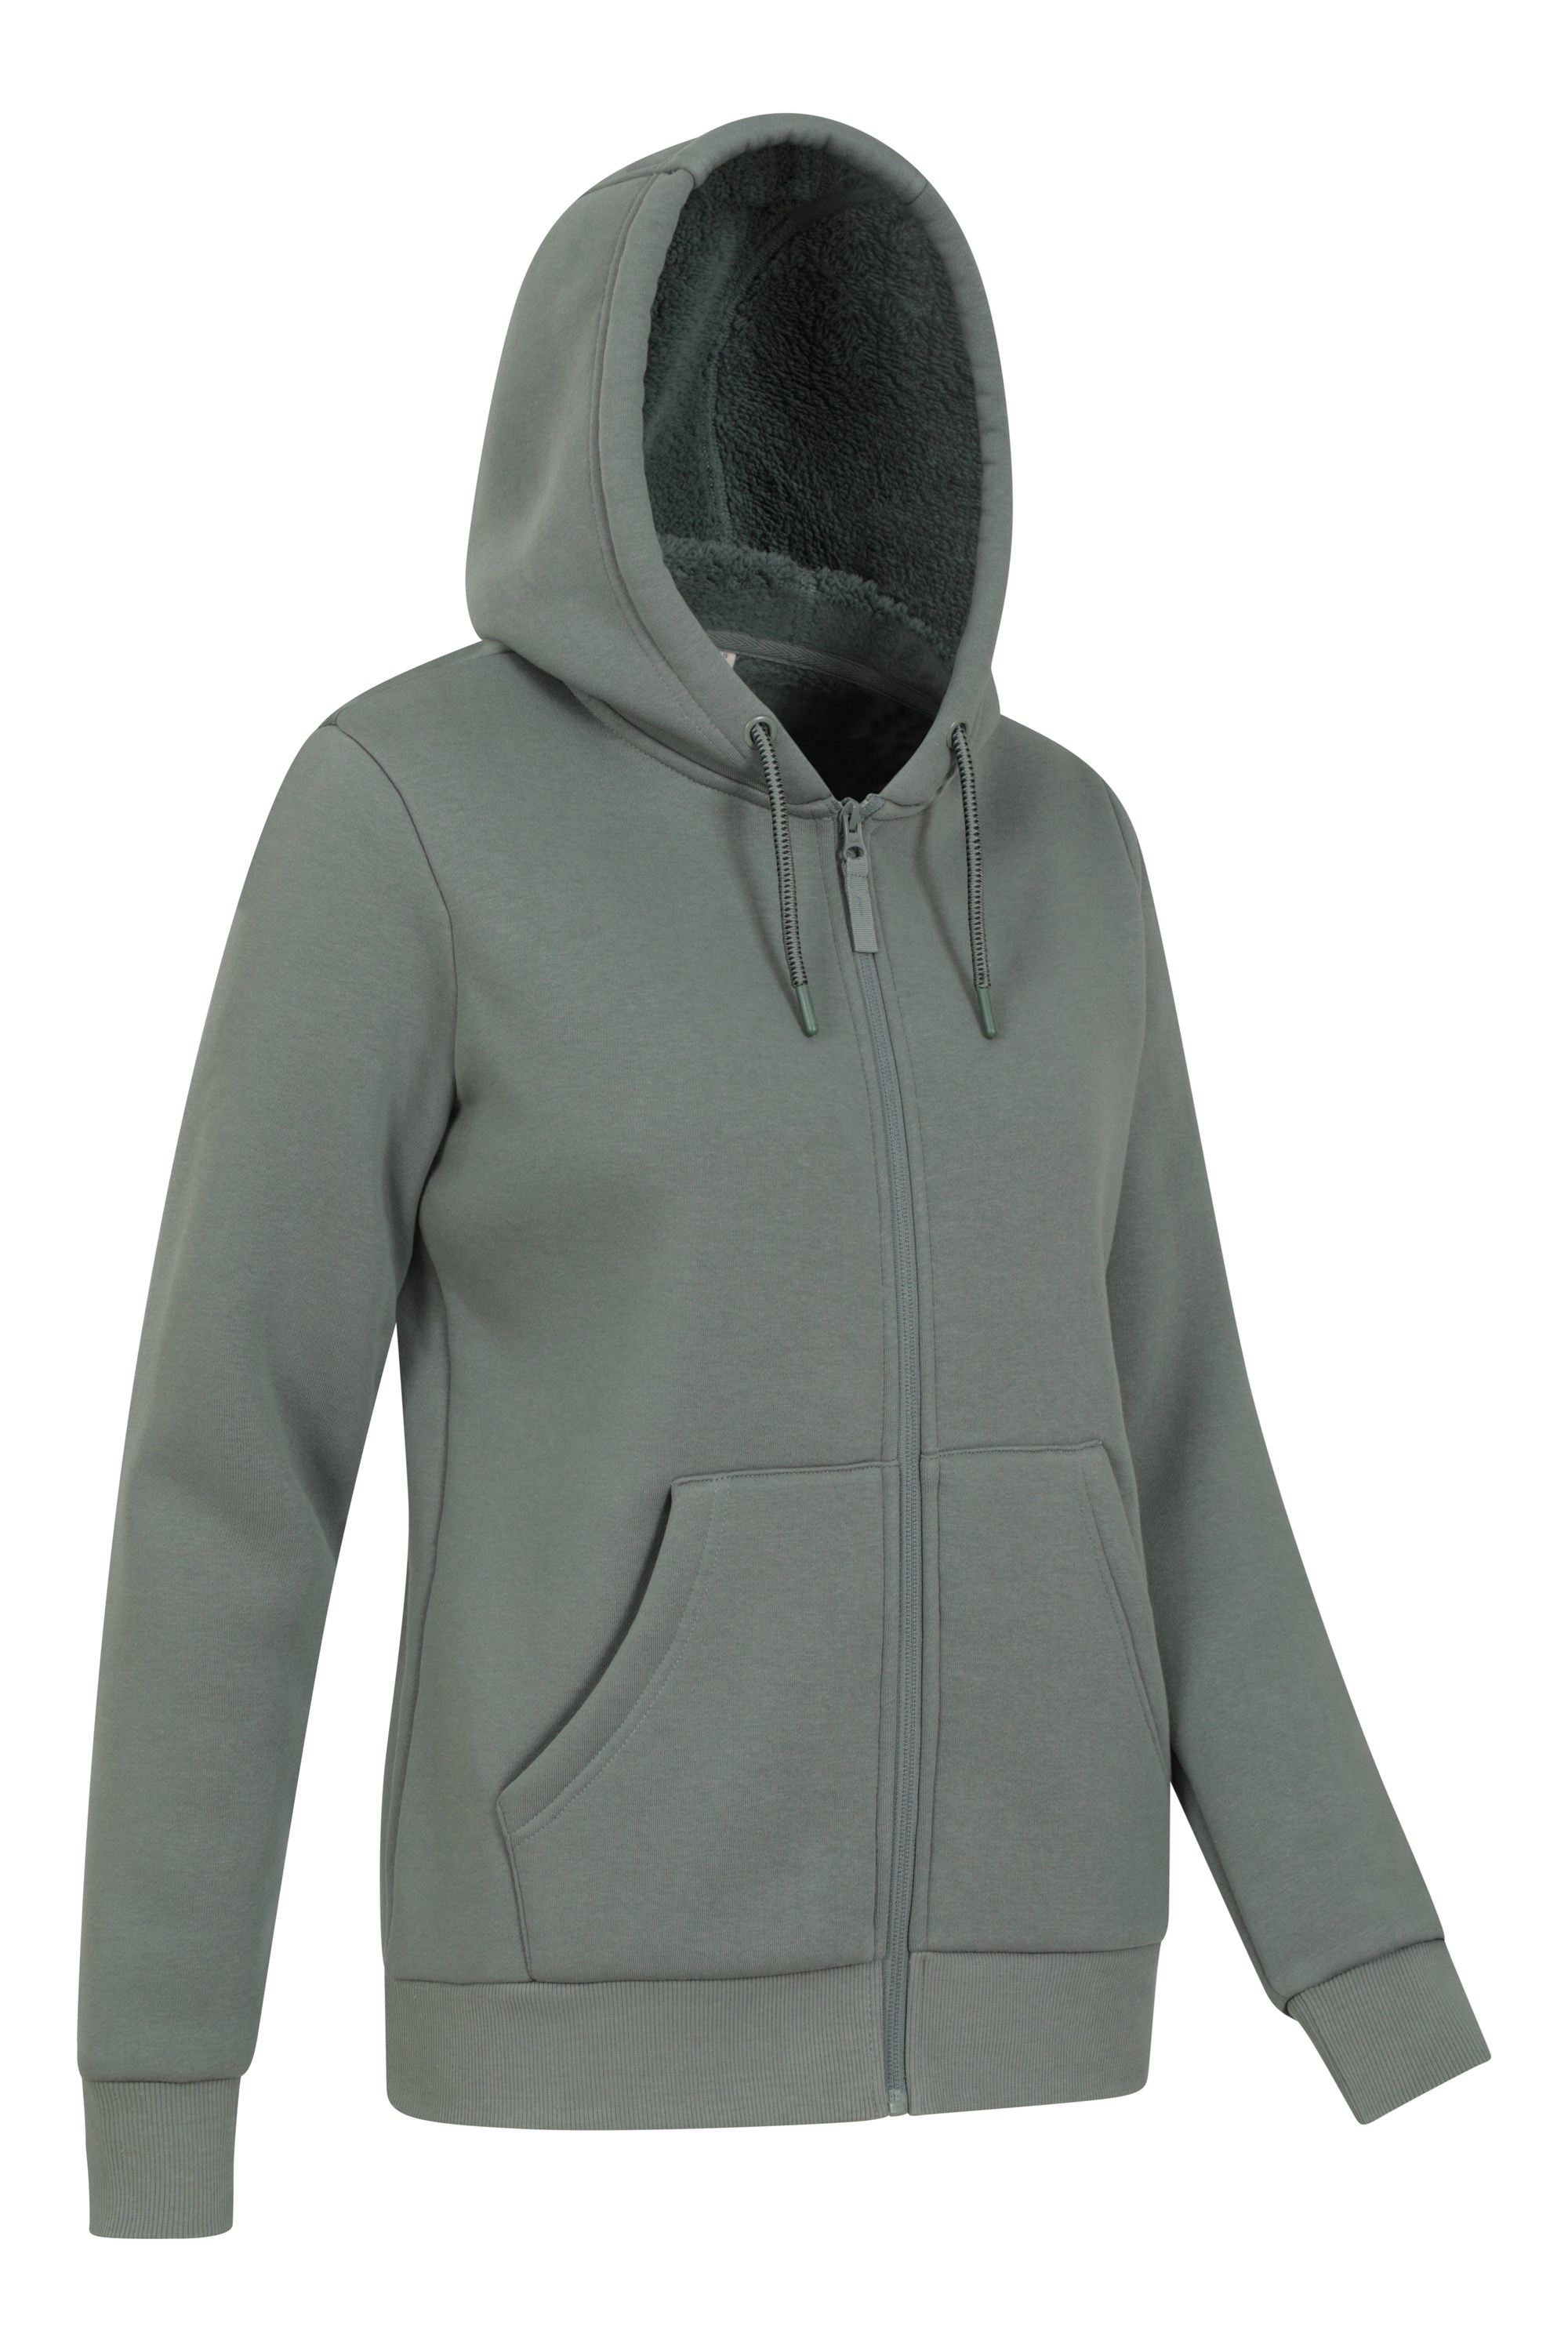 All in Motion Girls Cream Ivory Sherpa Jacket Full Zip Hoodie Sweatshirt 4  5 XS